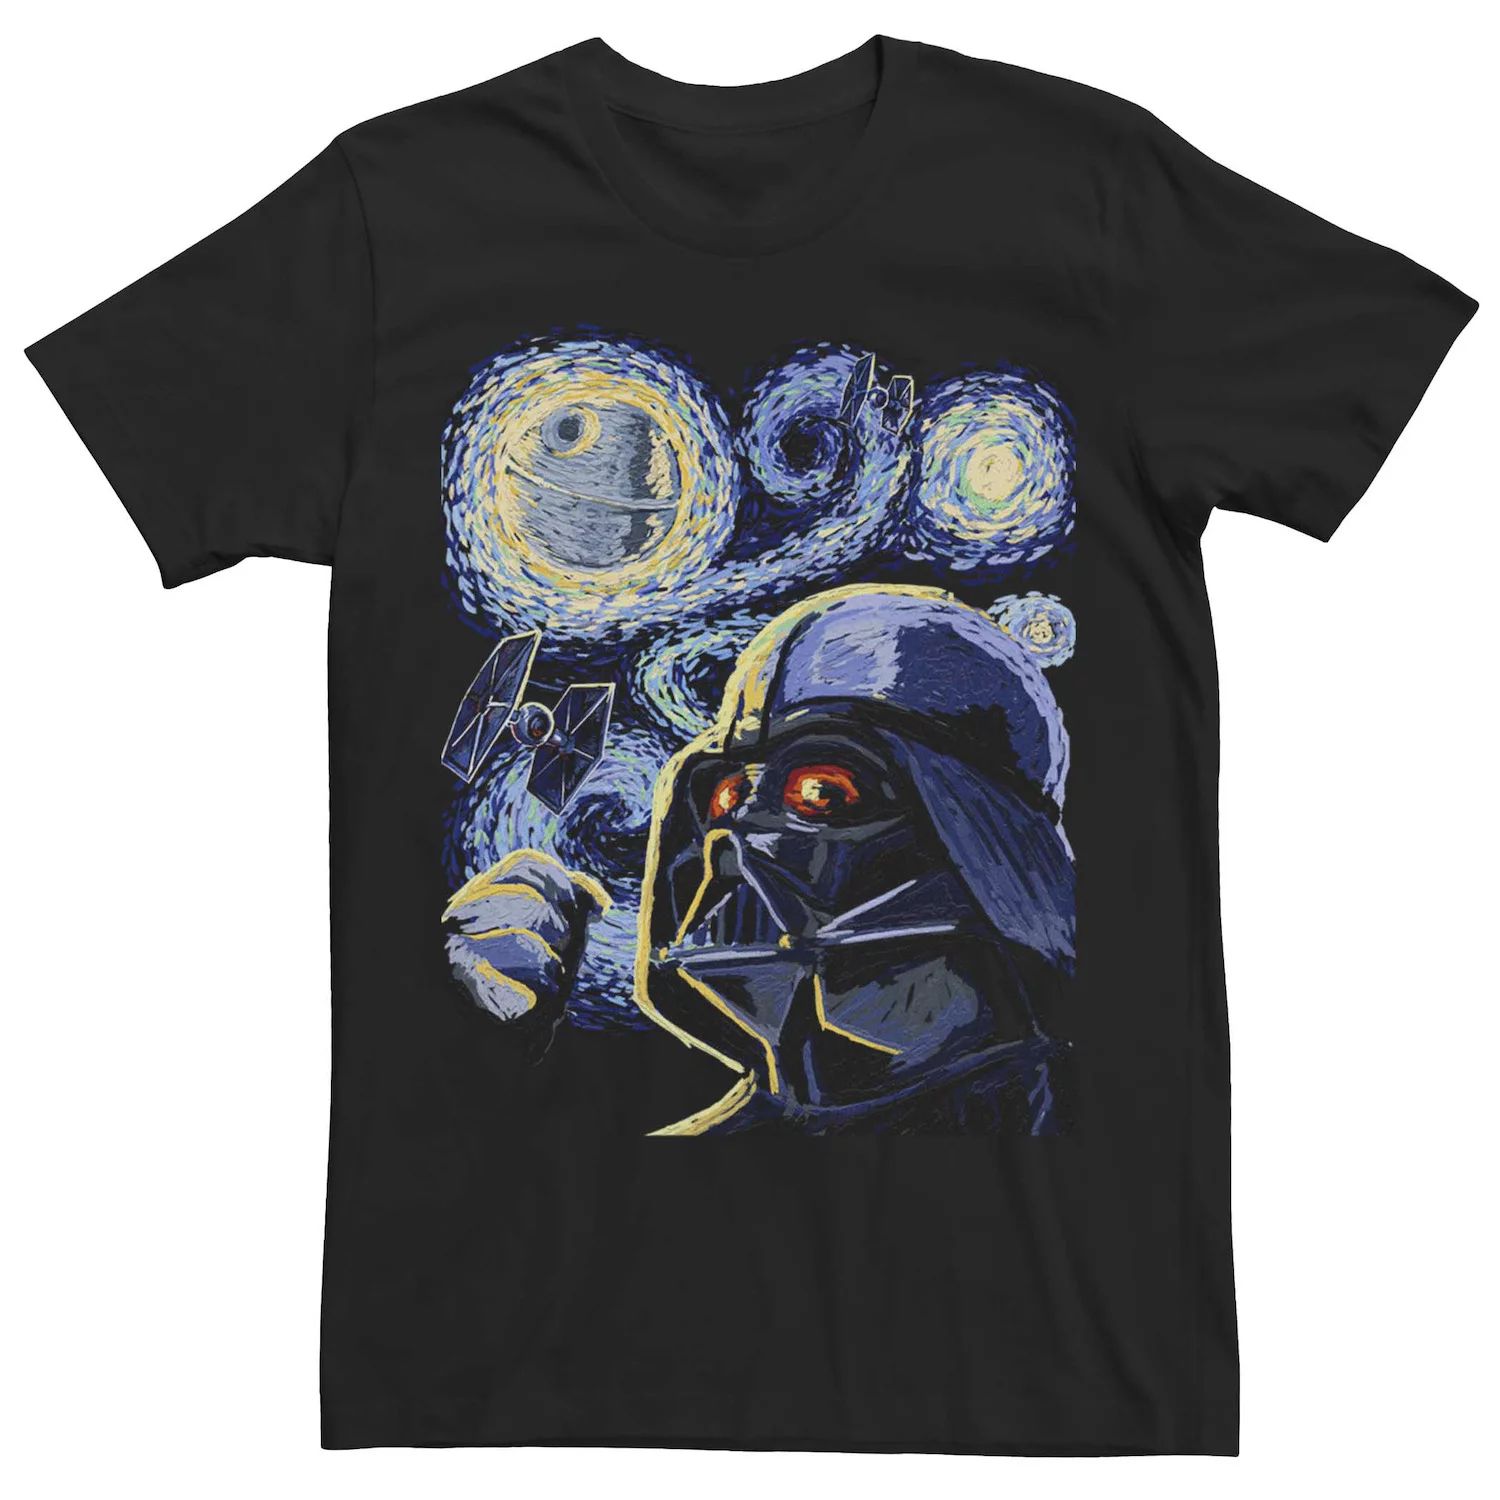 Мужская футболка с рисунком Дарта Вейдера «Звездные войны» Licensed Character цена и фото